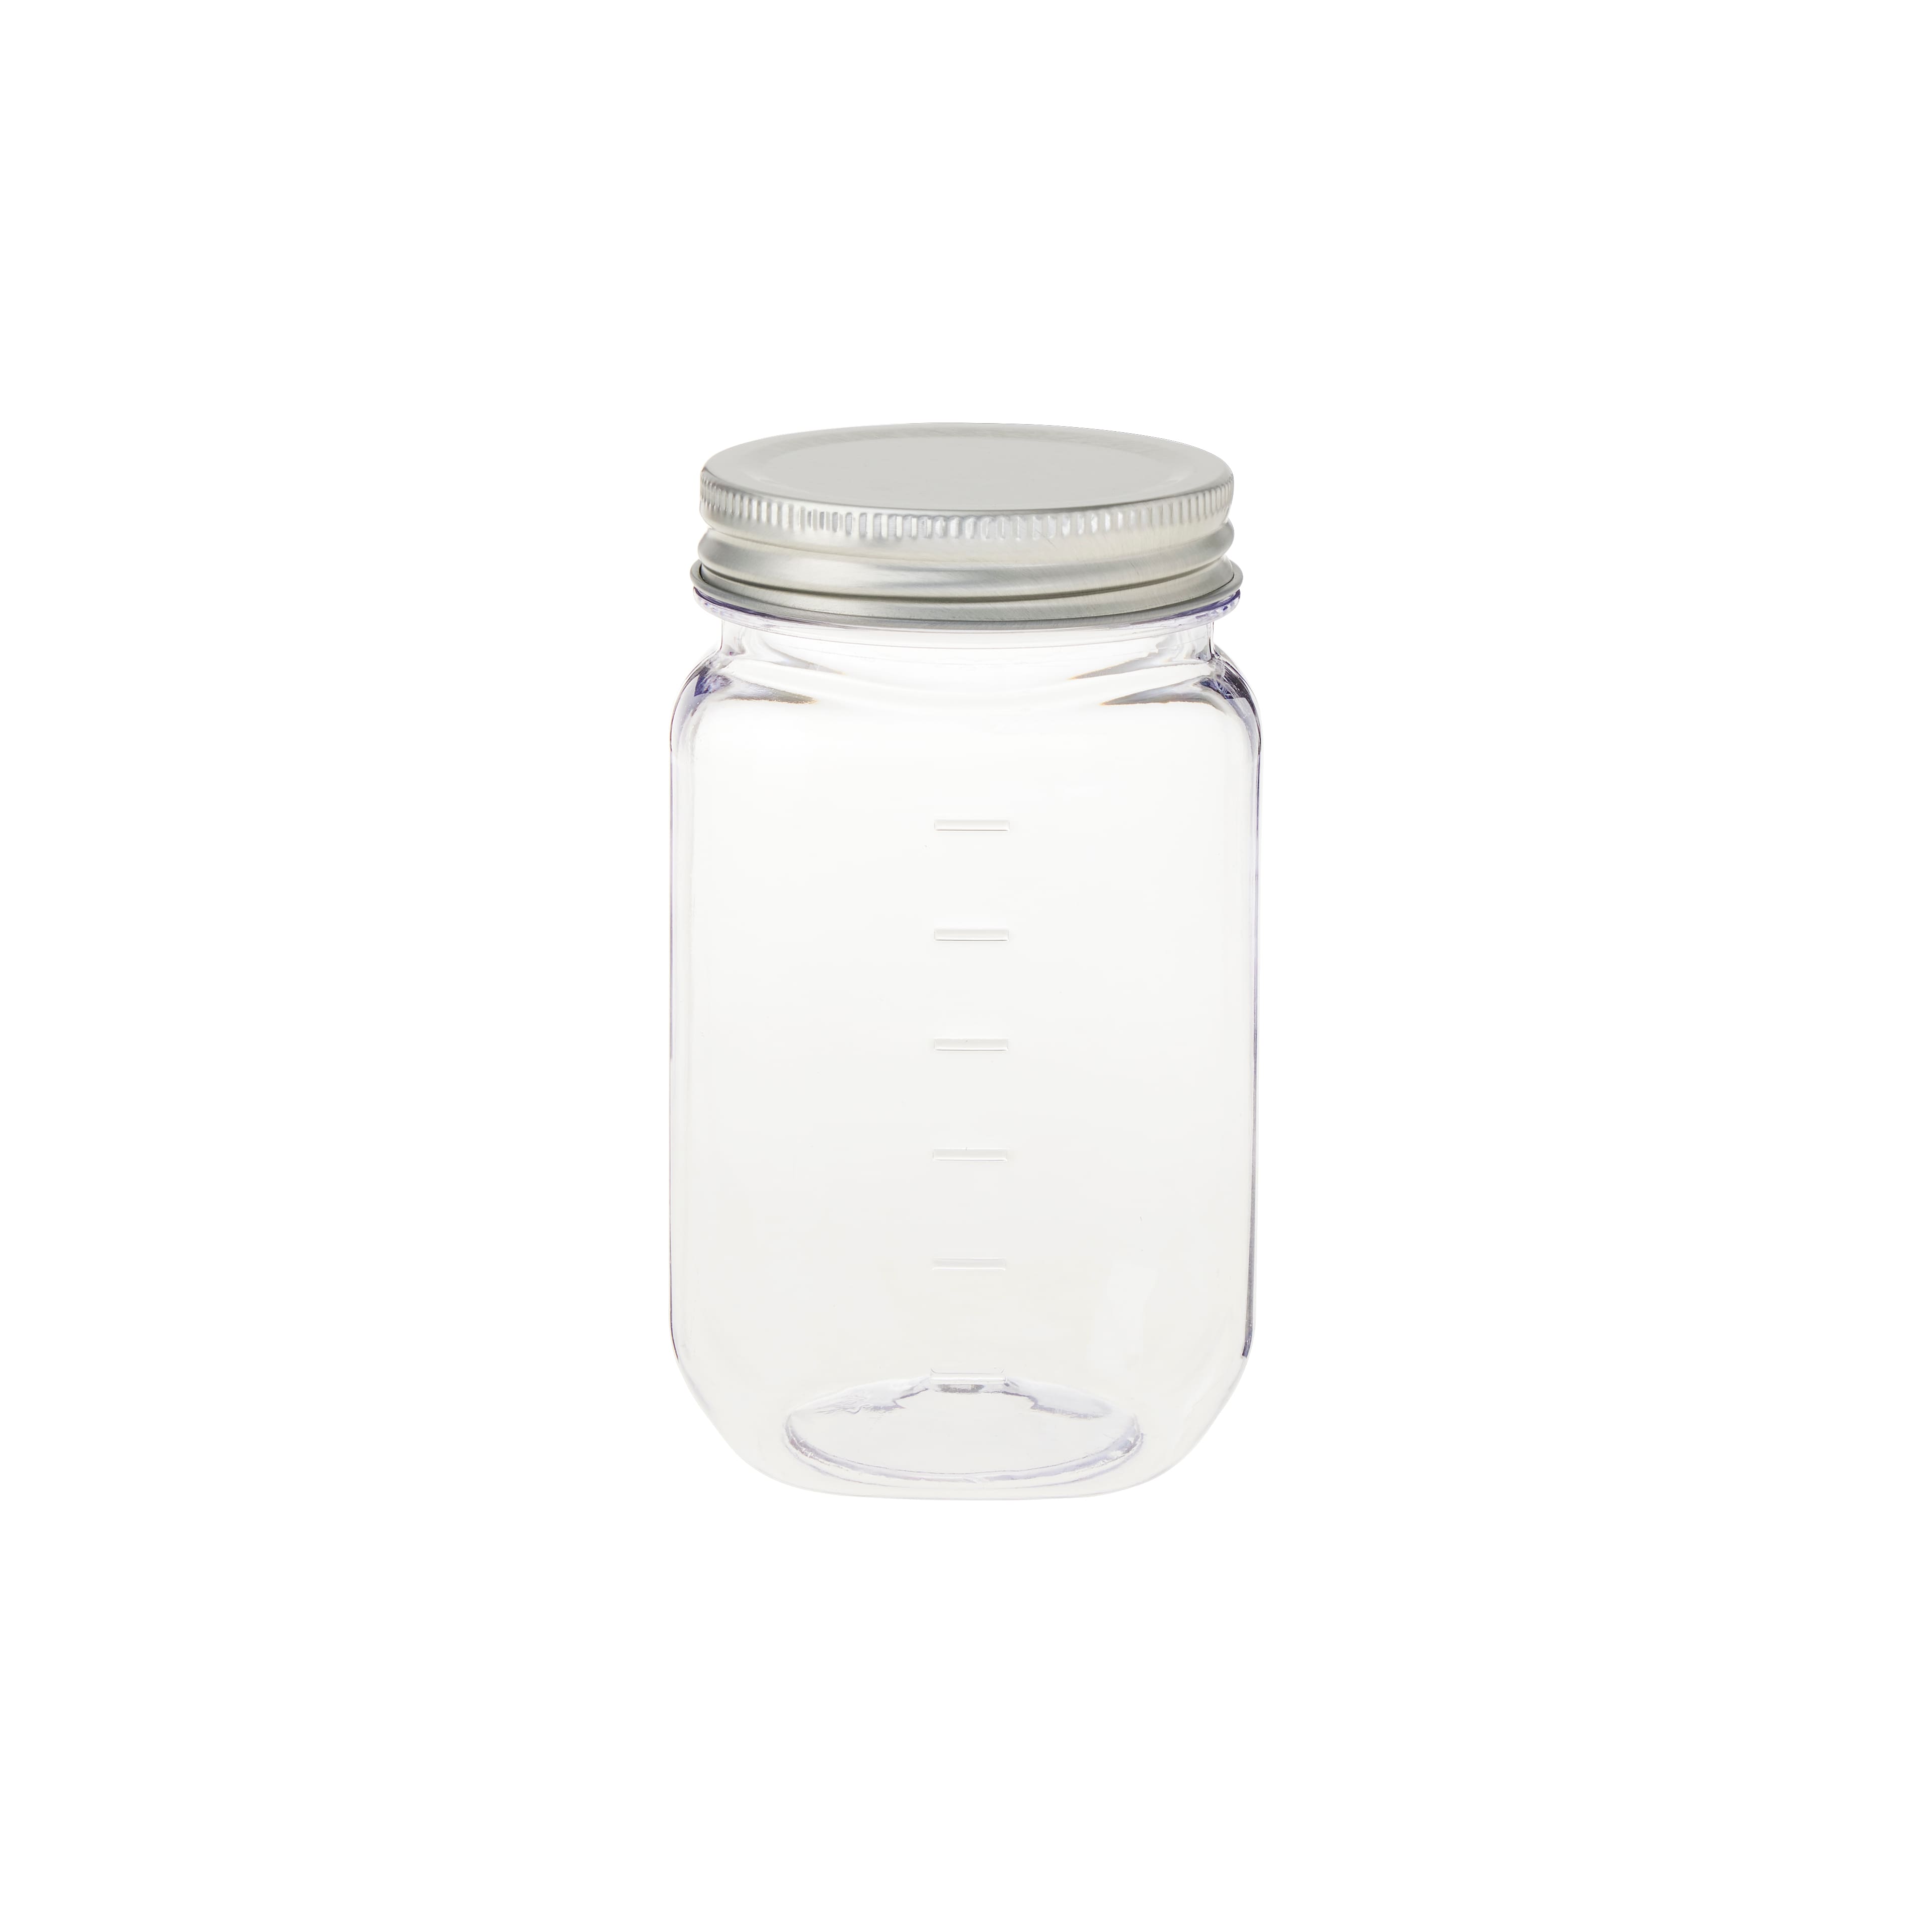 16 oz jar with lid